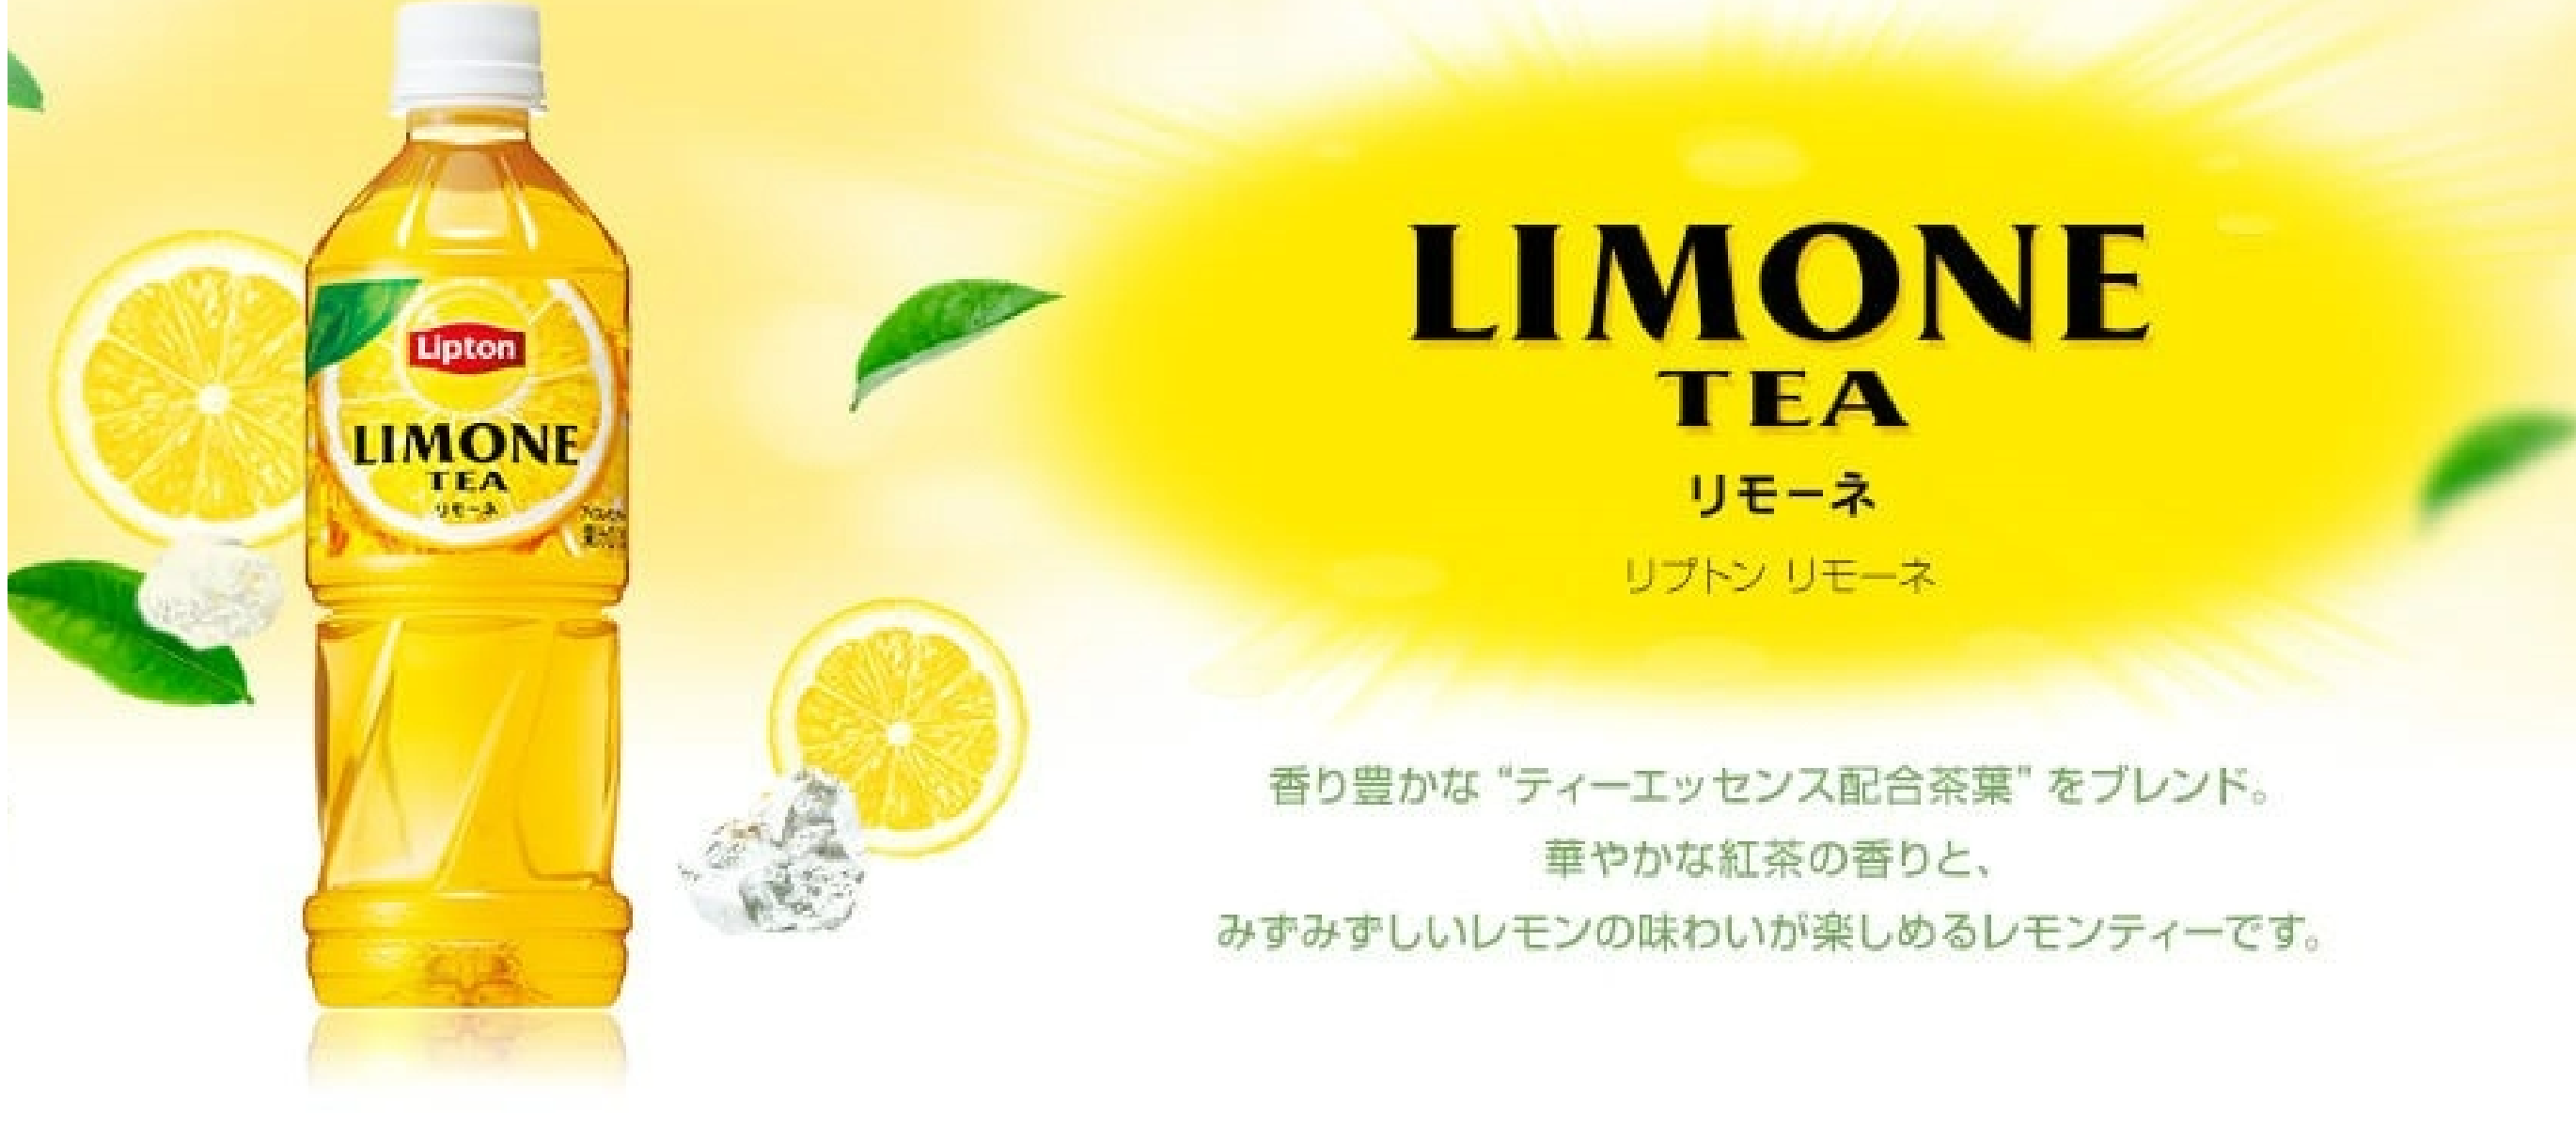 Limone Tea | Lipton Japan